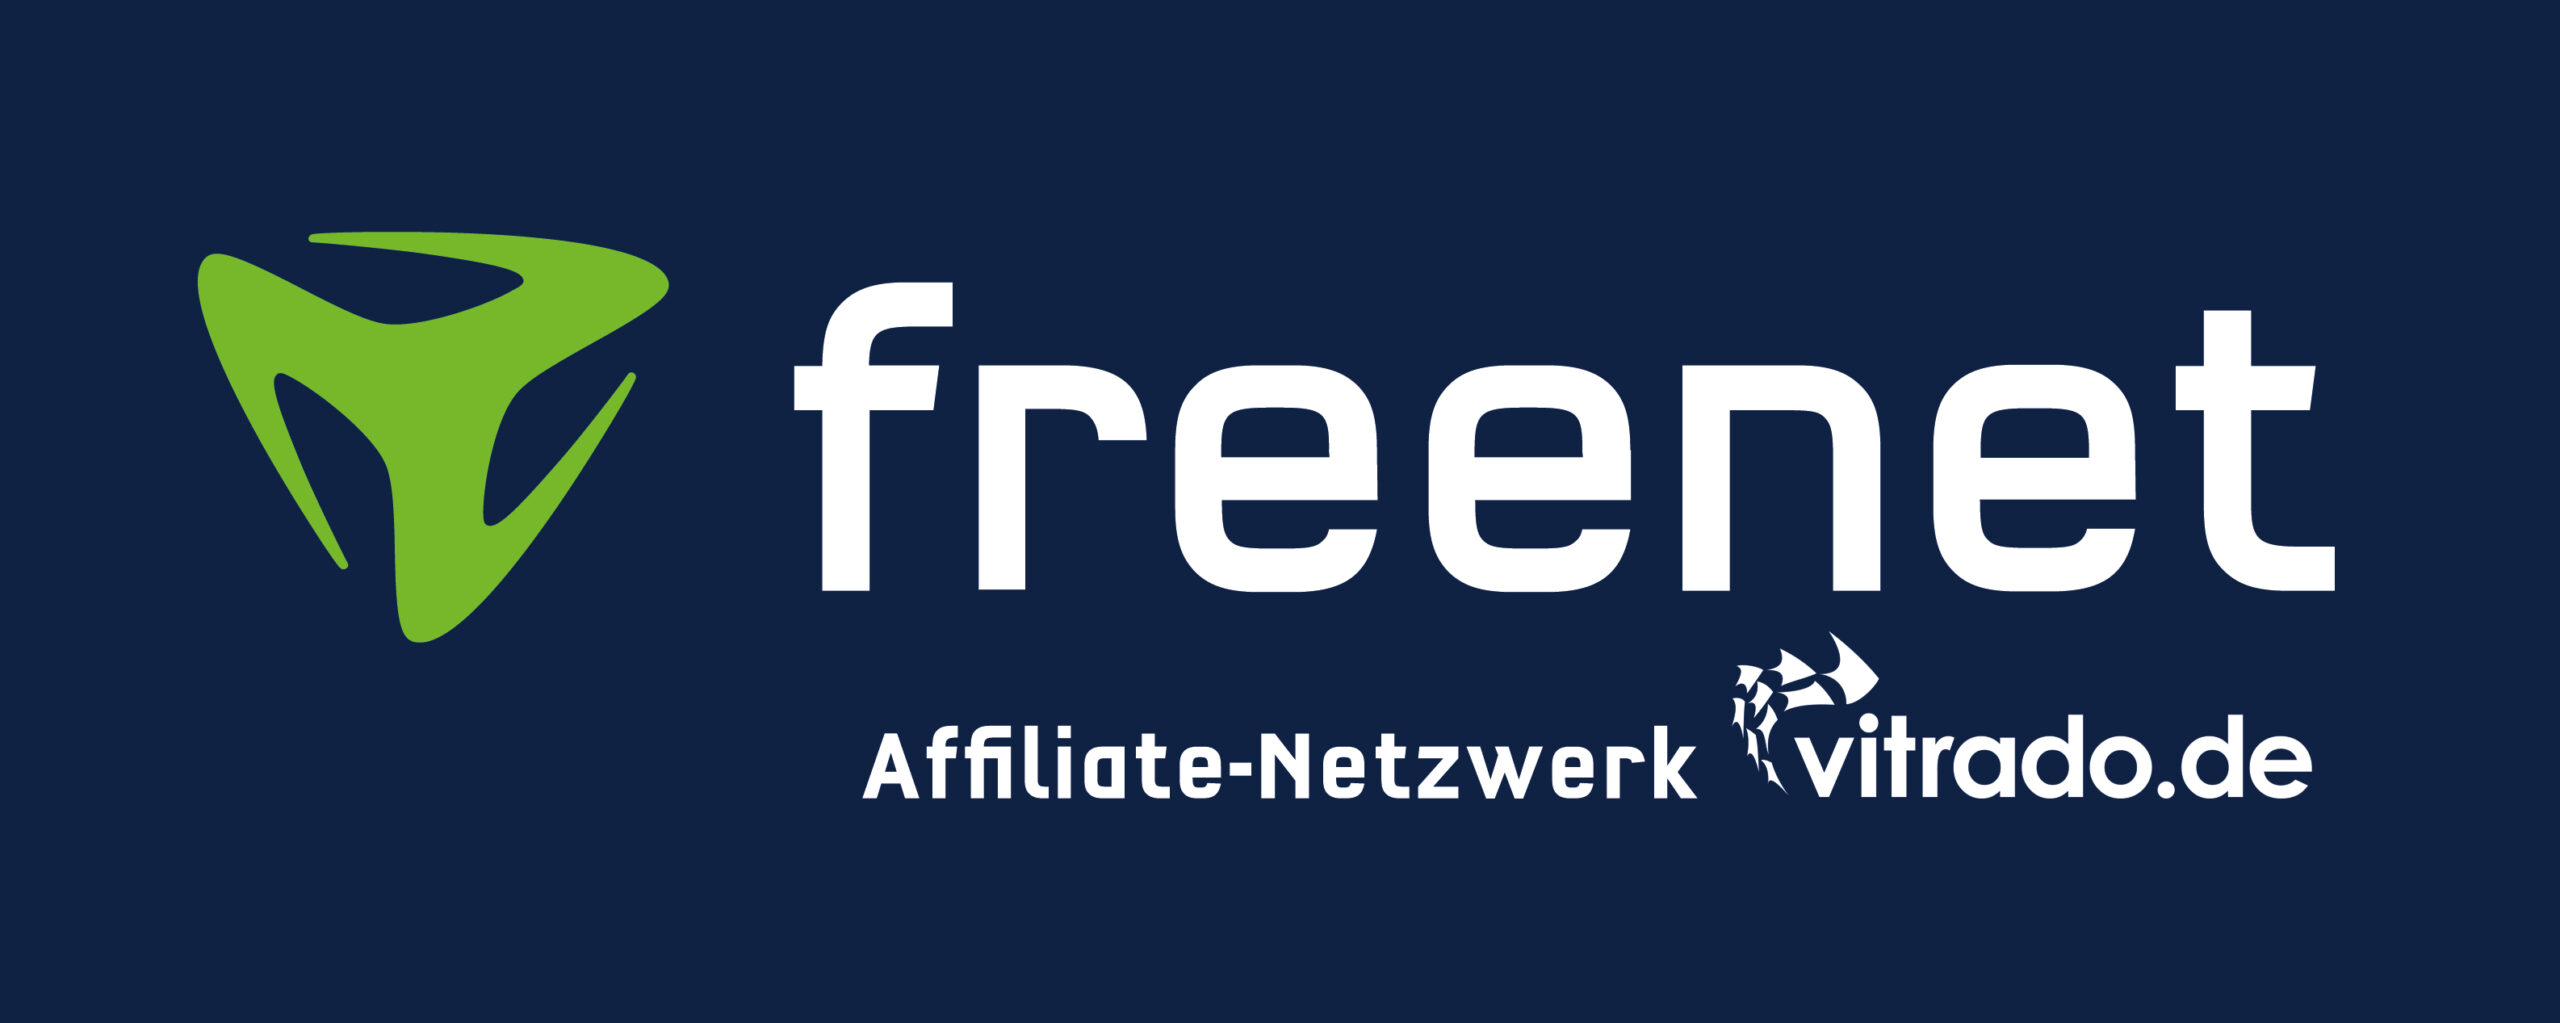 freenet-Logo-Q42021-4c-210922